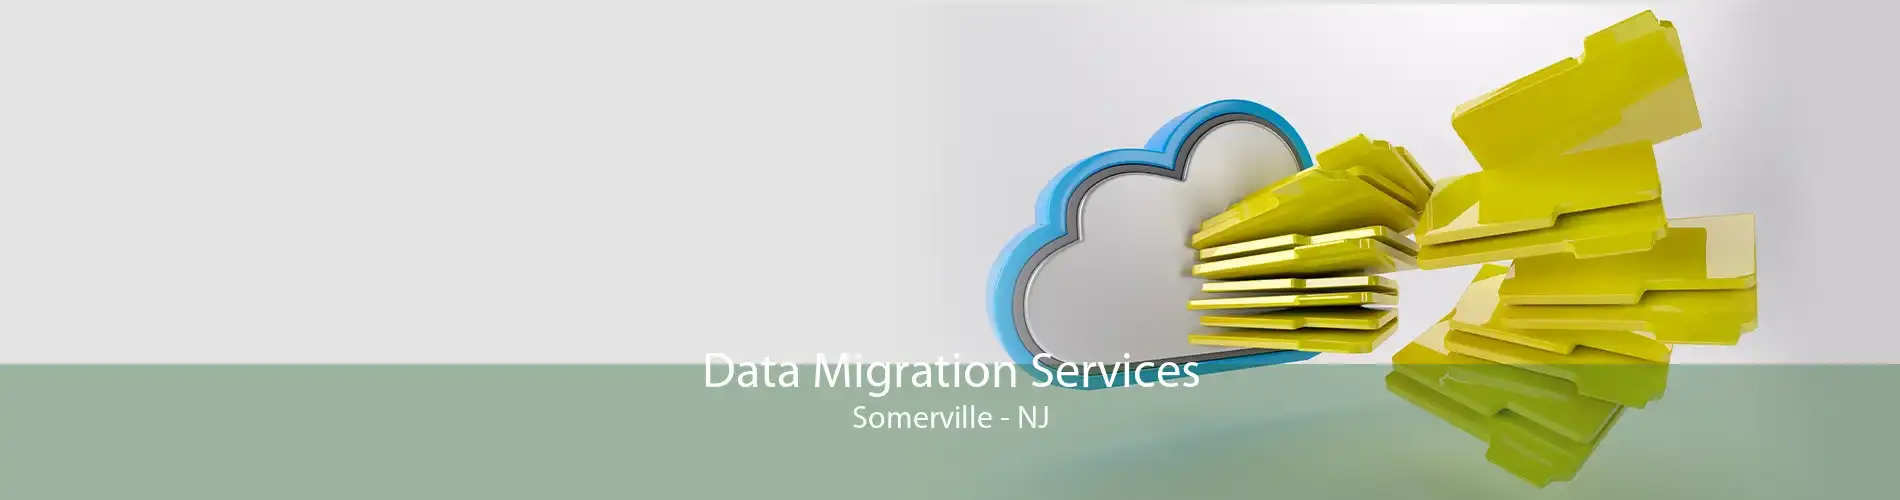 Data Migration Services Somerville - NJ